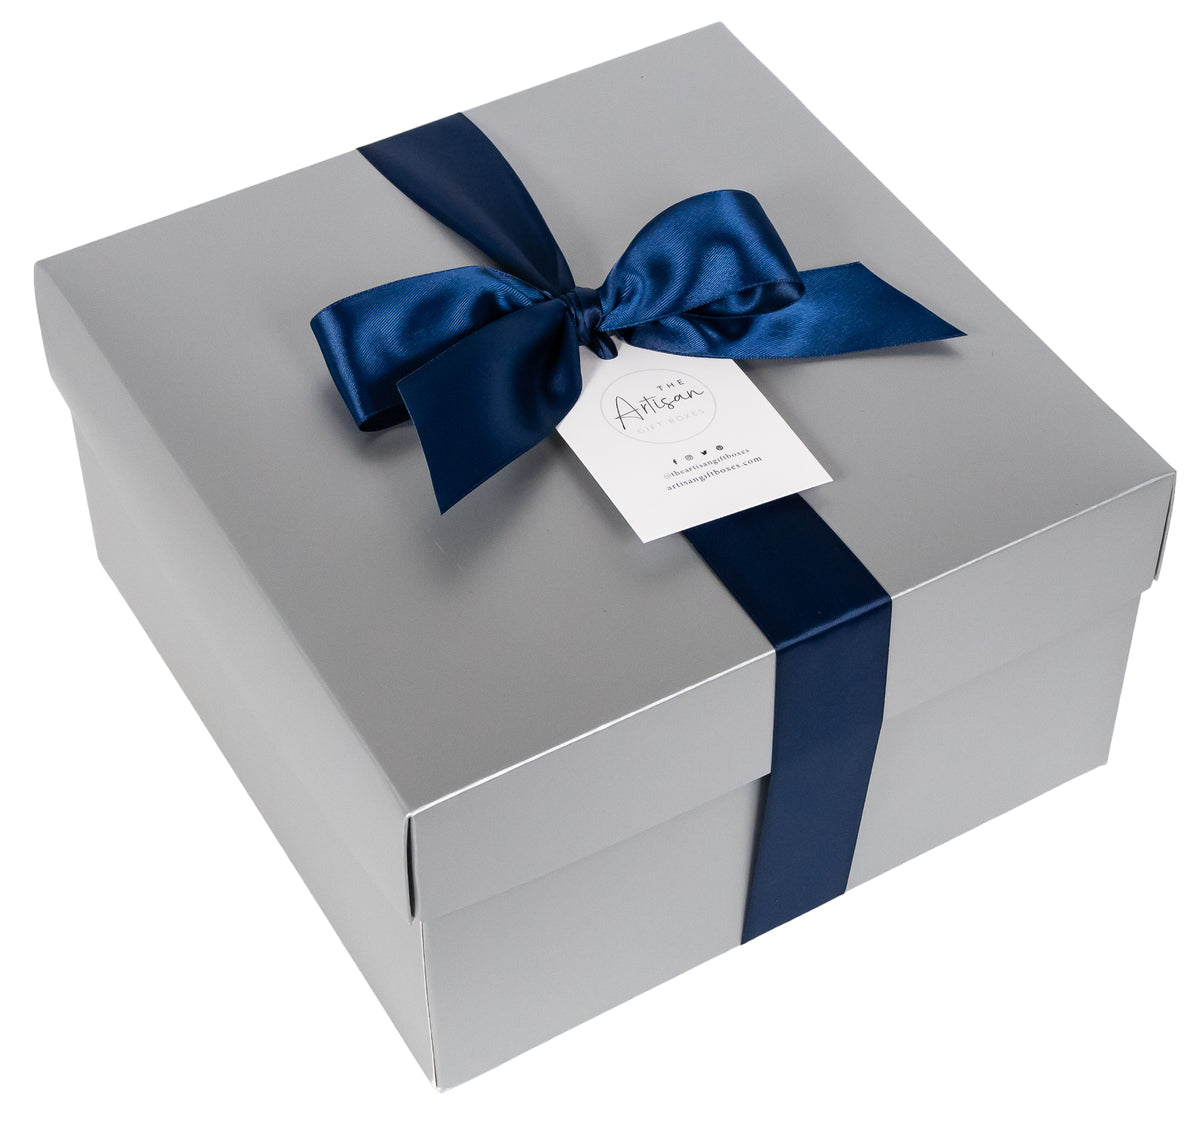 Self-Care Stress Relief Gift Box